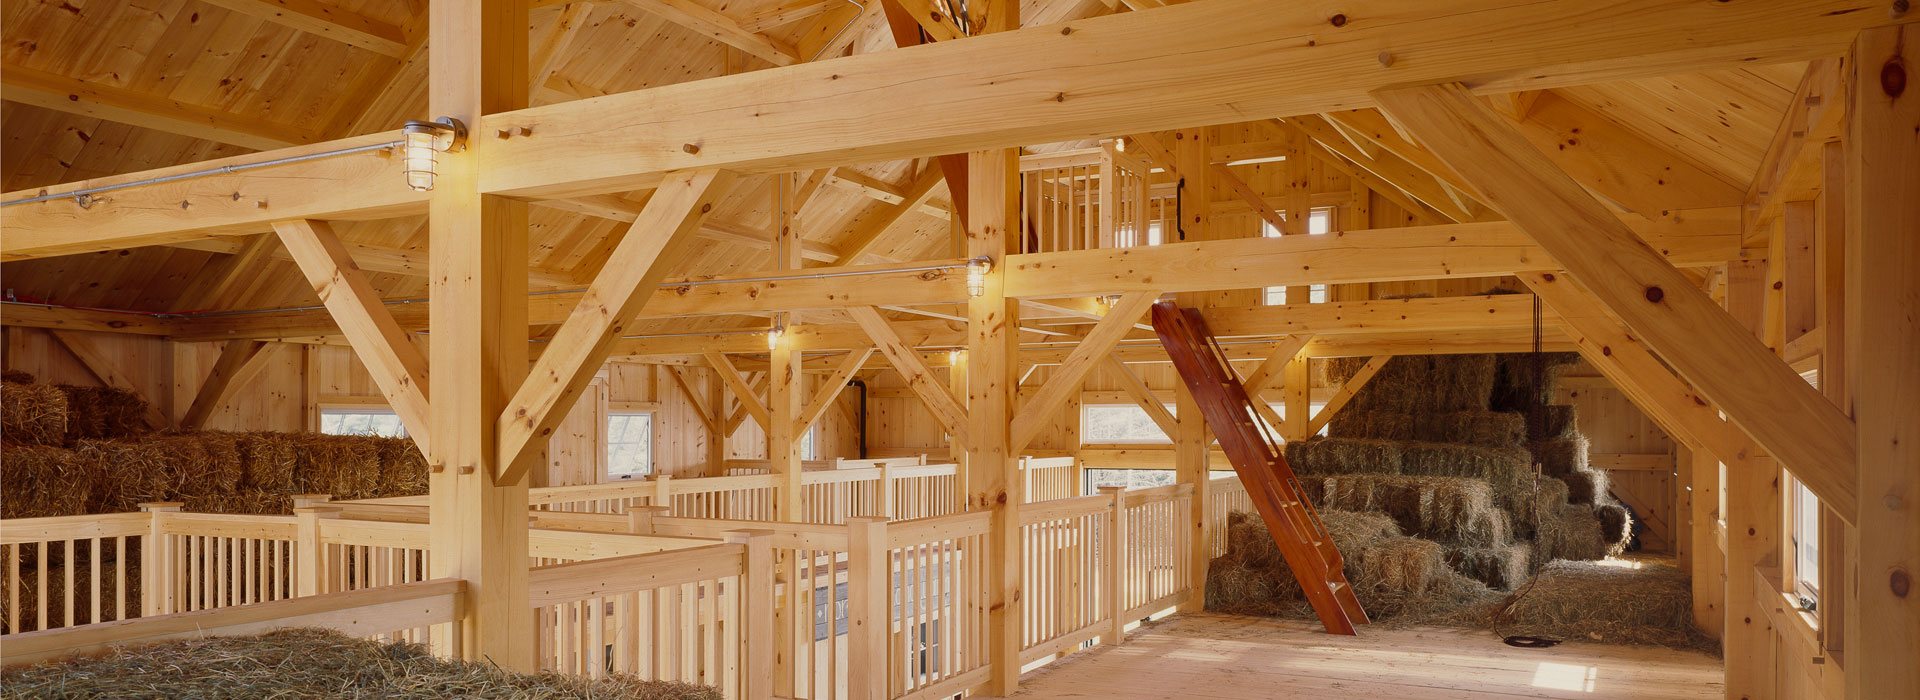 Timber frame barns